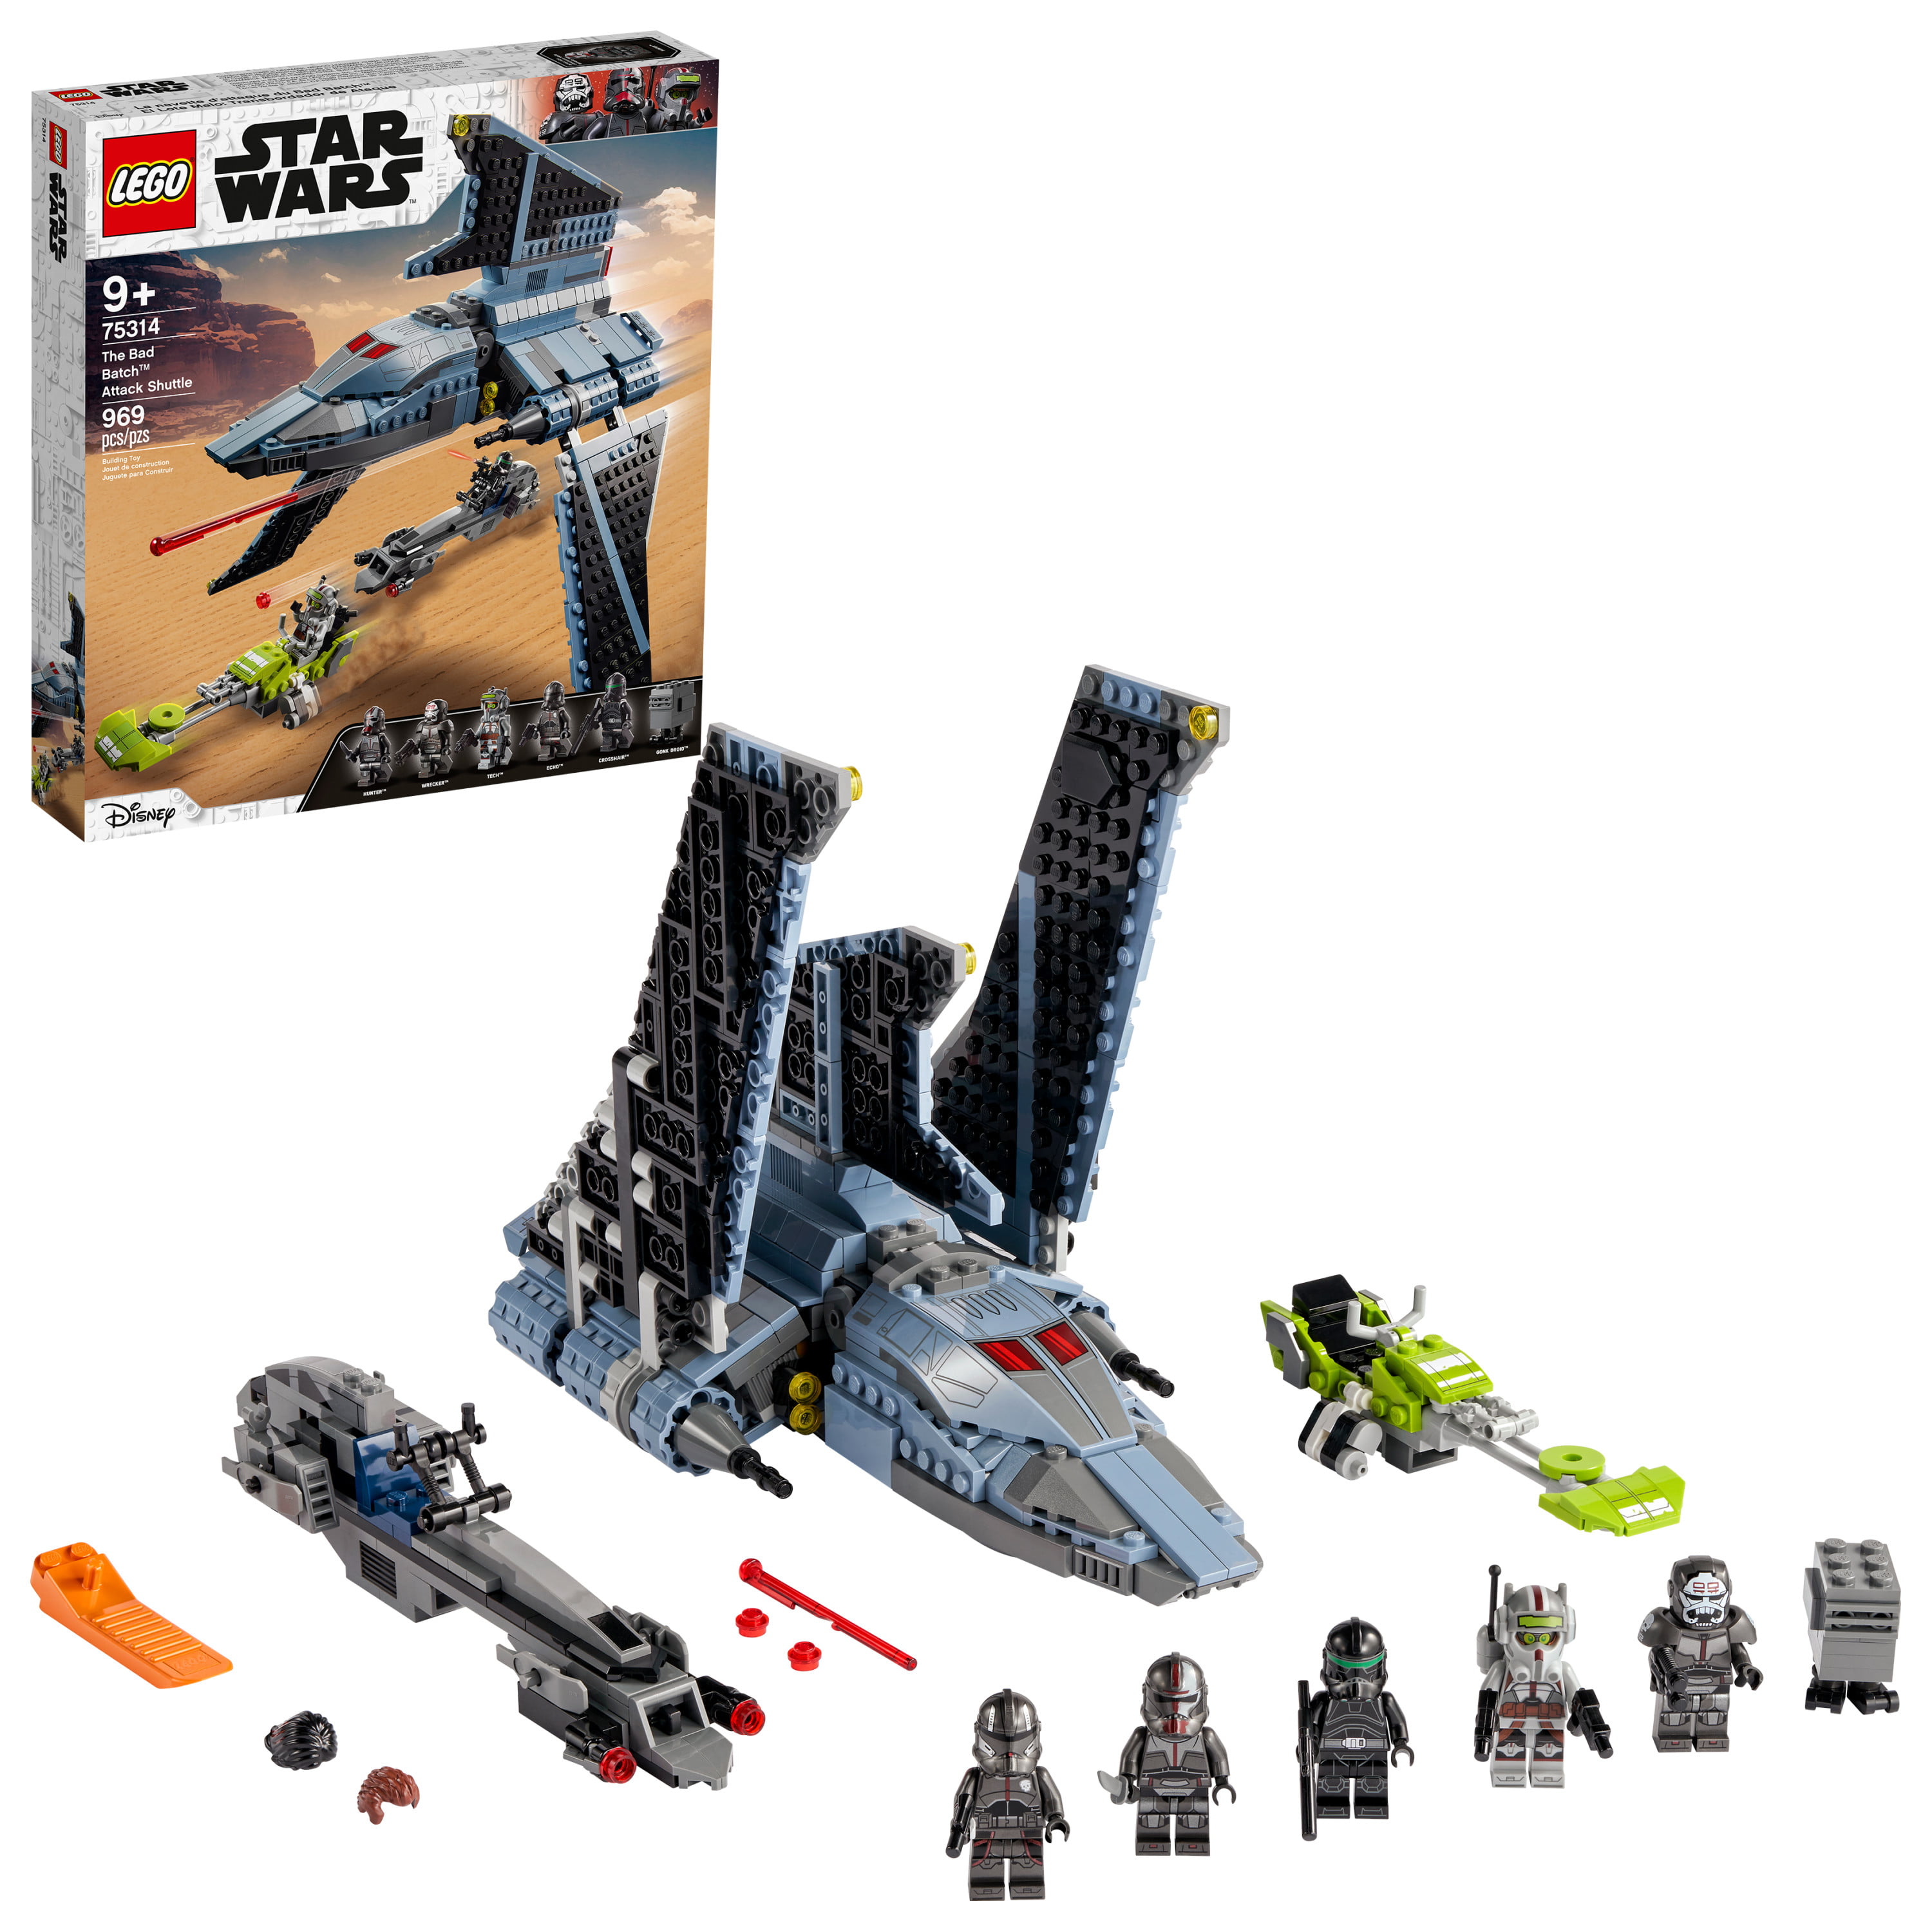 Star Wars Black Fits 104 Minifigs LEGO Minifigure Display Frame Case Large